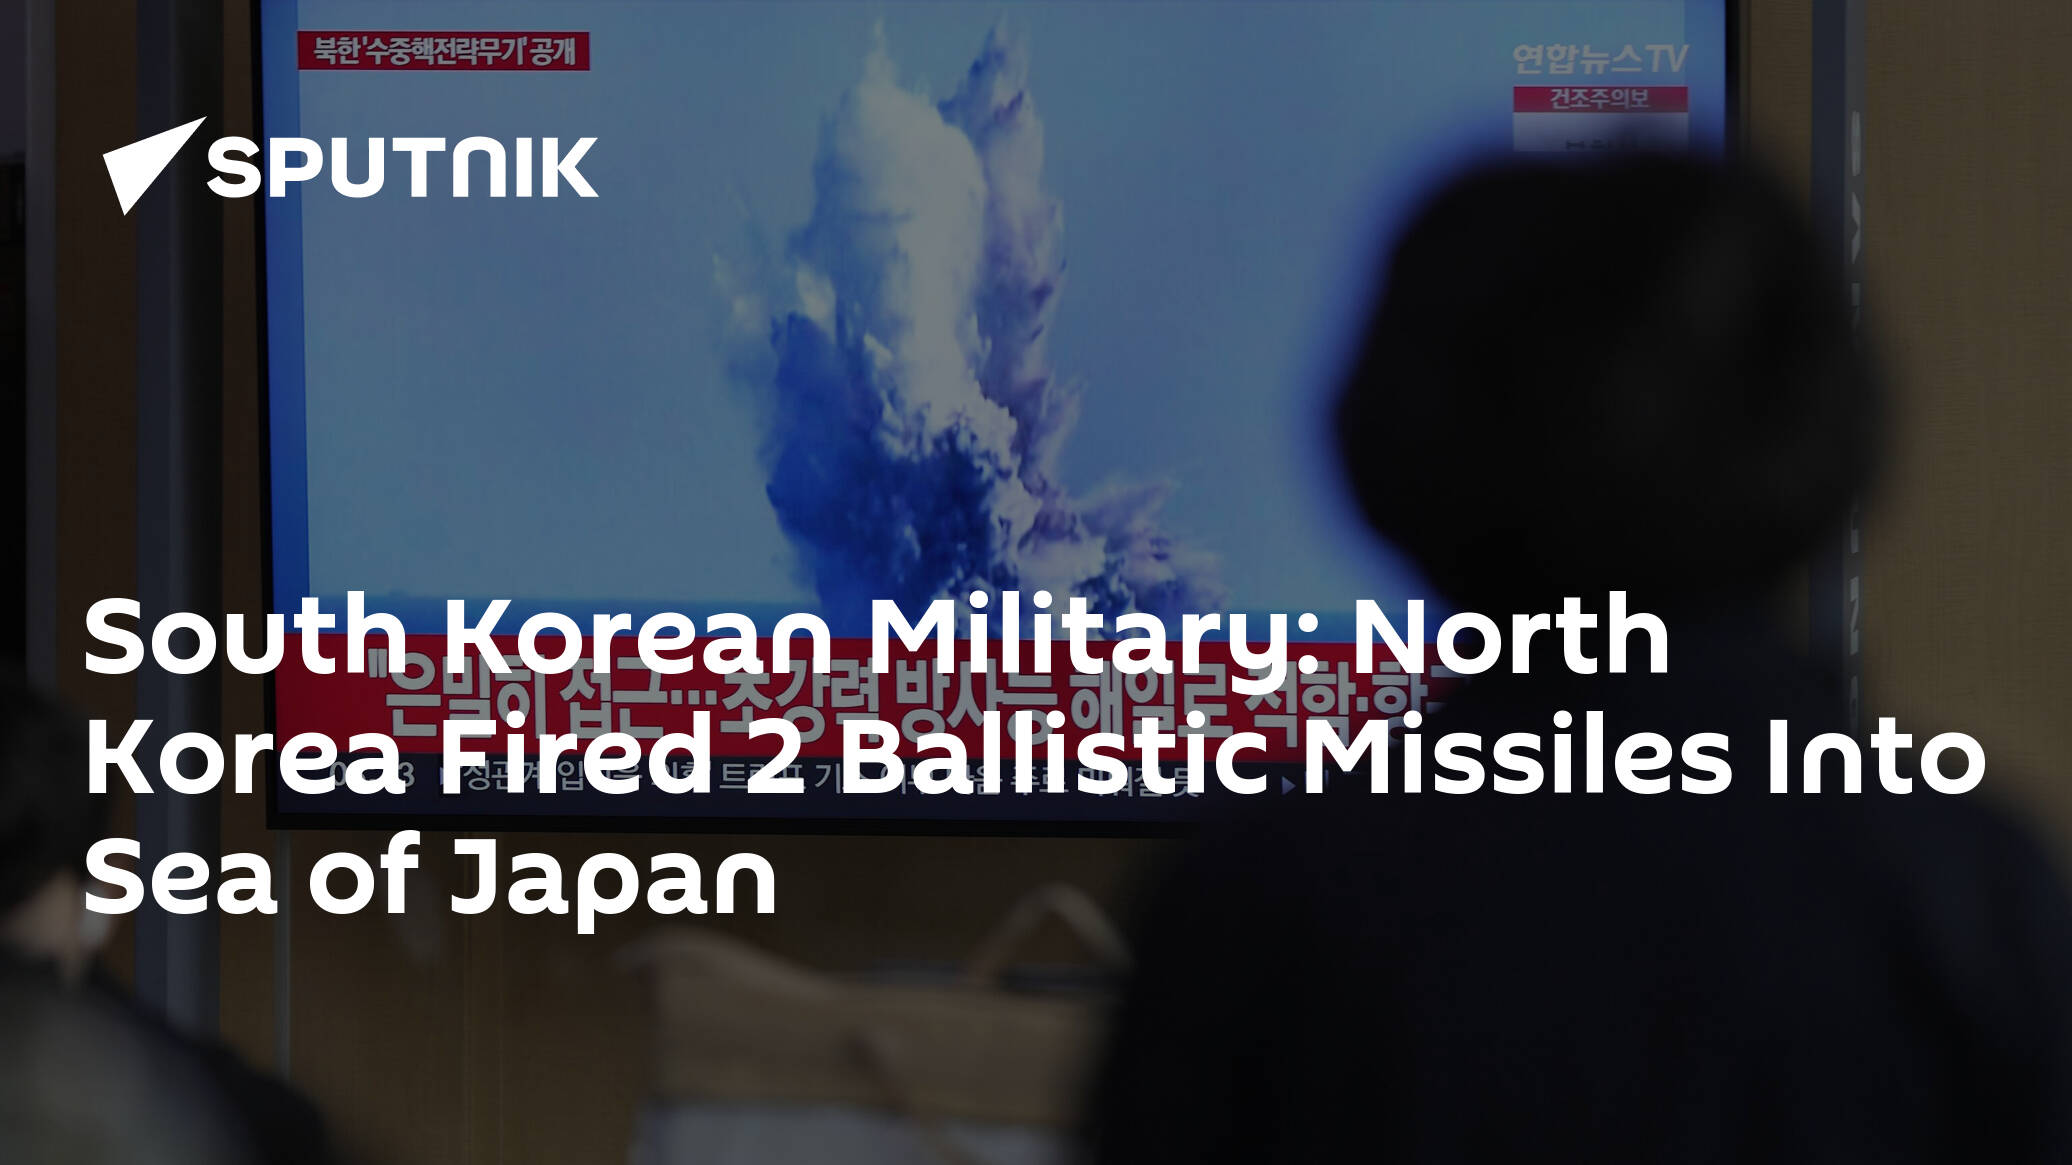 South Korean Military: North Korea Fired 2 Ballistic Missiles Into Sea of Japan